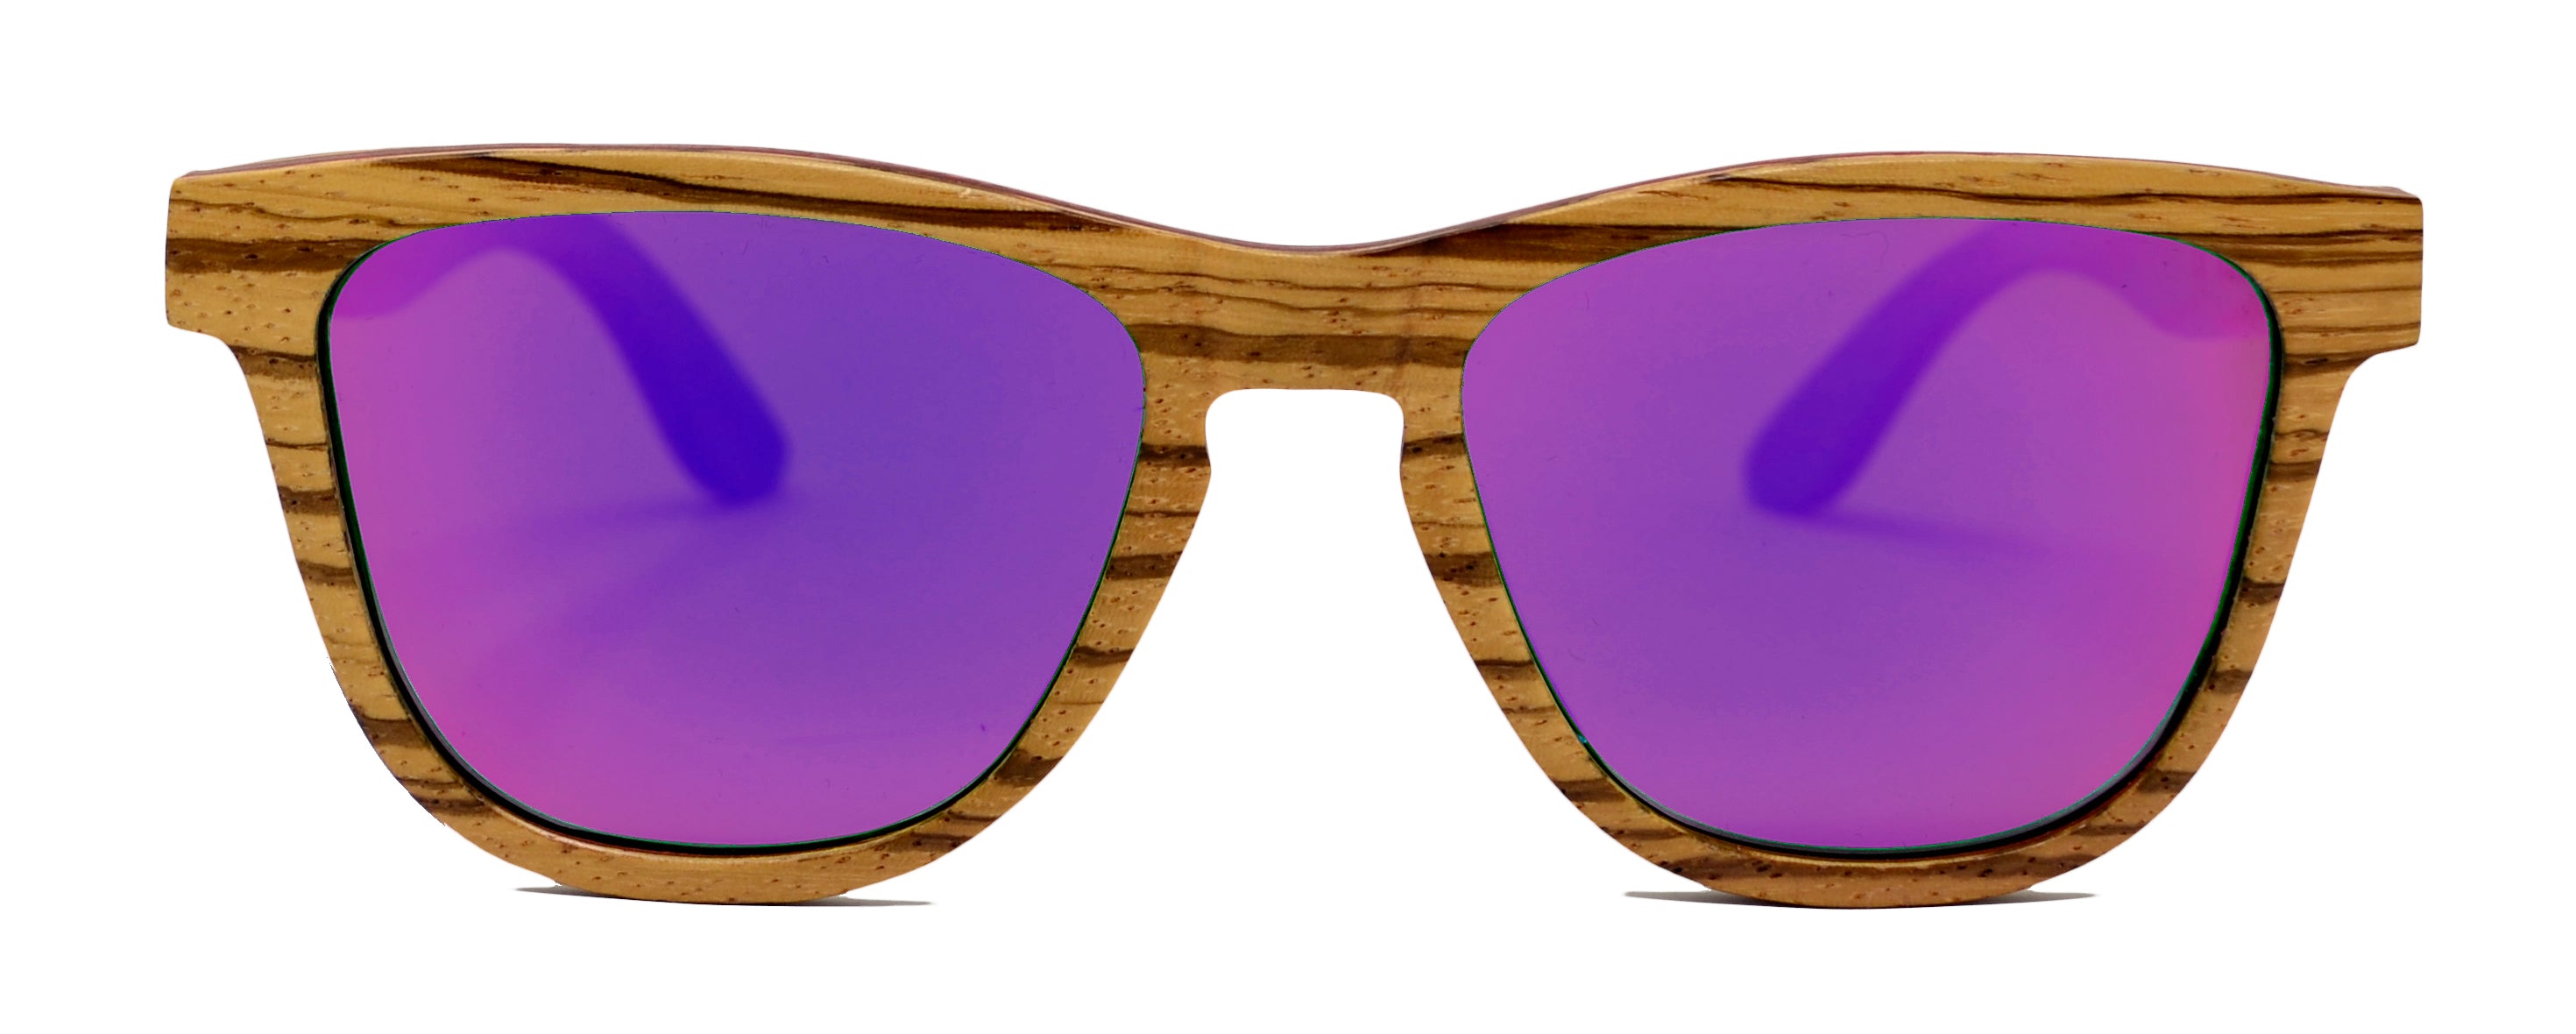 Camber Series - Zebrawood Sunglasses